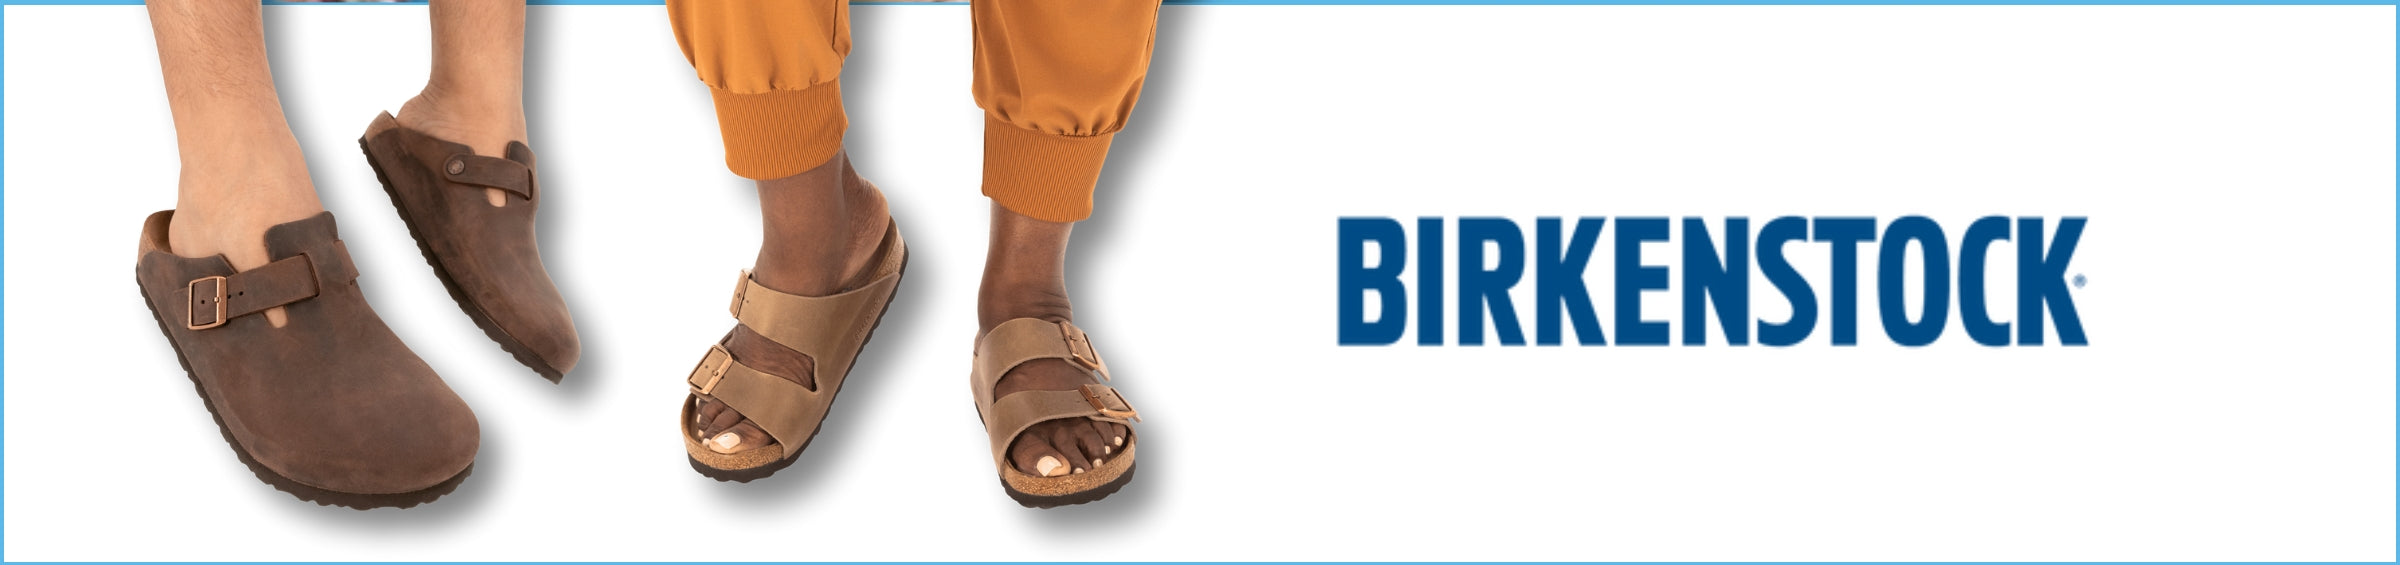 Birkenstock Sandals, Clogs, Shoes & Boots